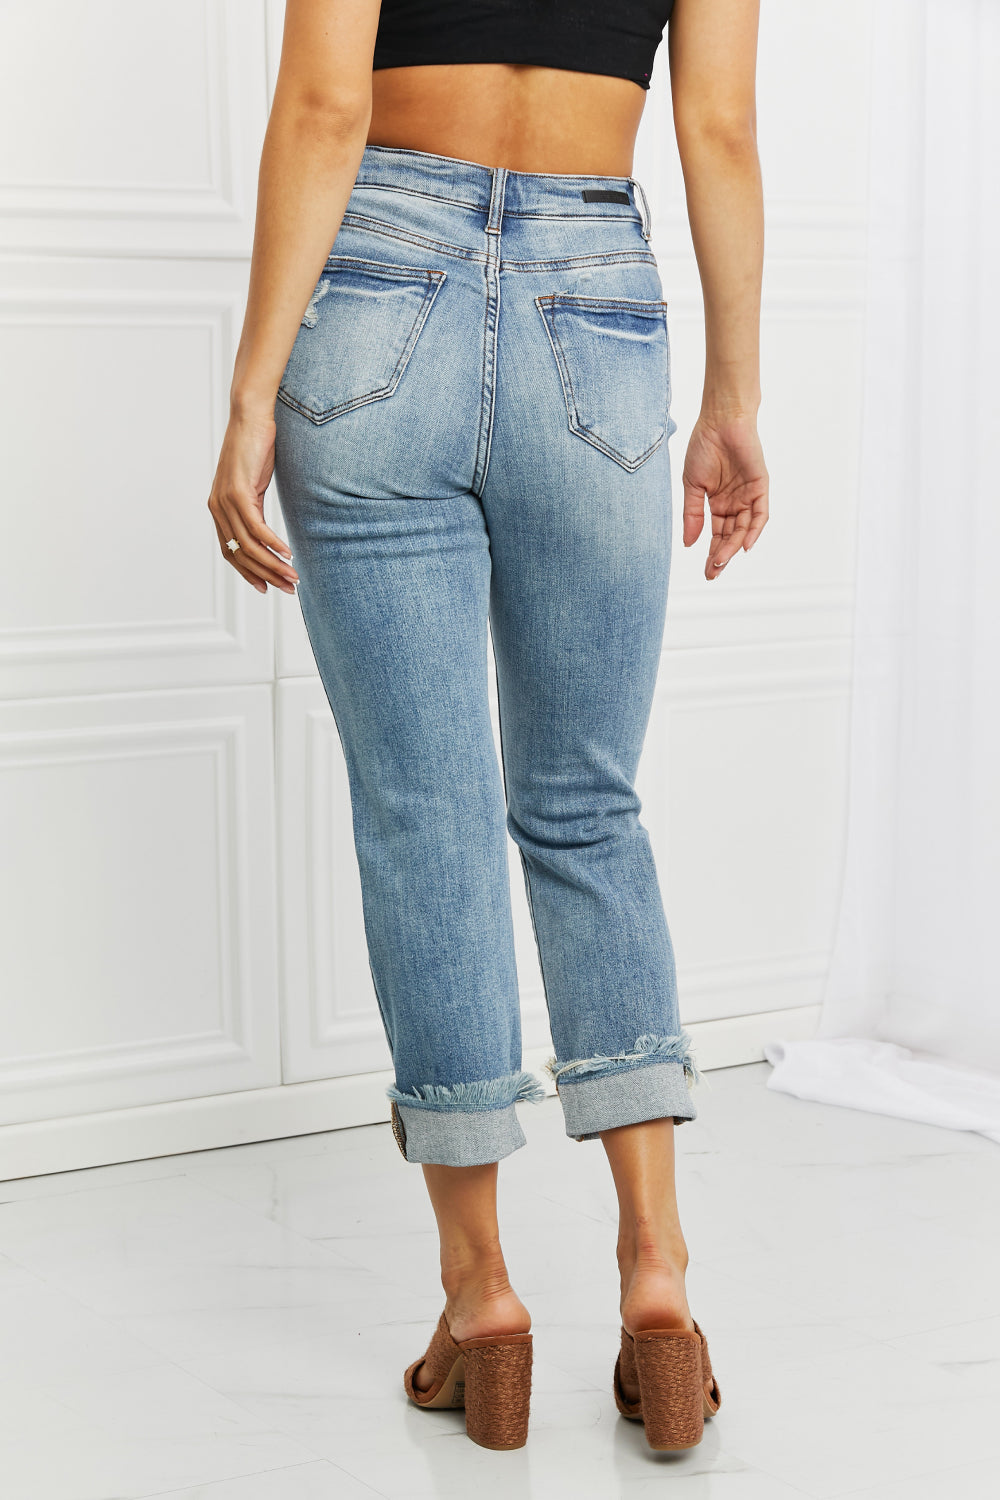 RISEN Full Size Leilani Distressed Straight Leg Jeans - The Fashion Unicorn